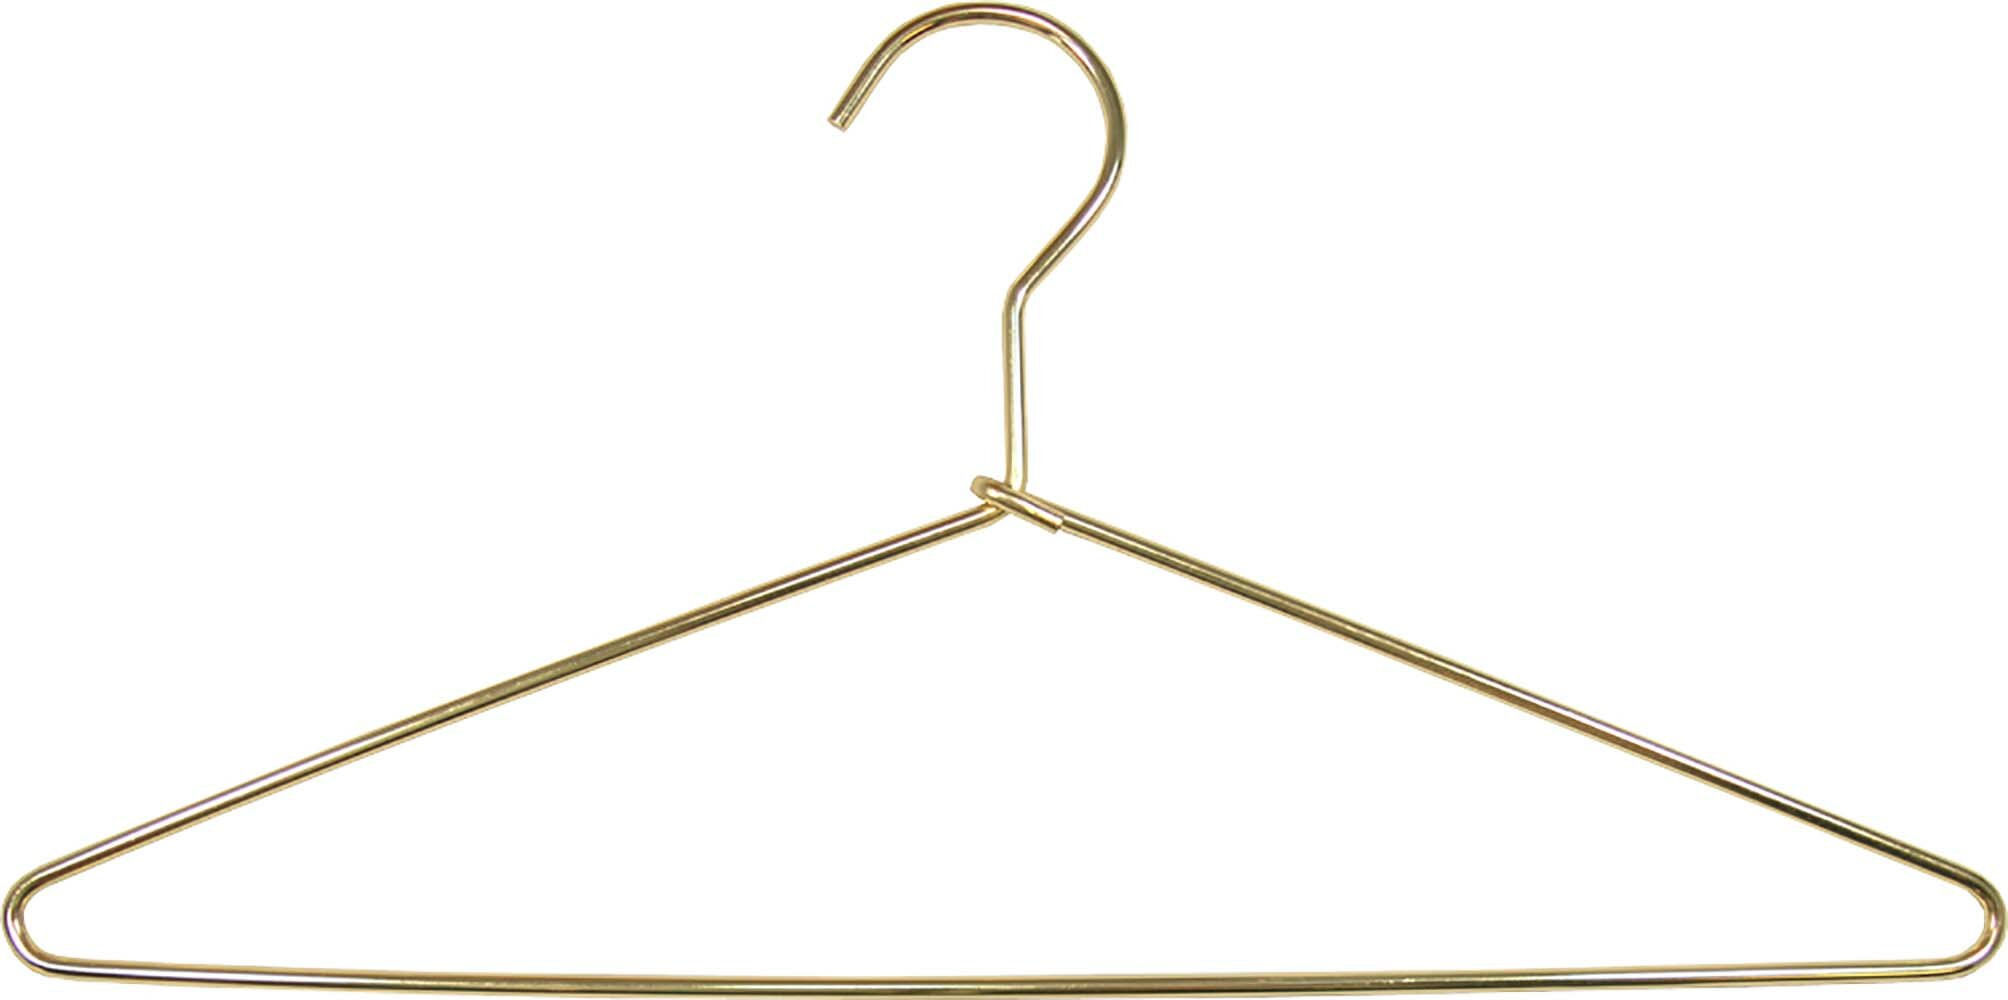 10 Best Metal Hangers Review - The Jerusalem Post